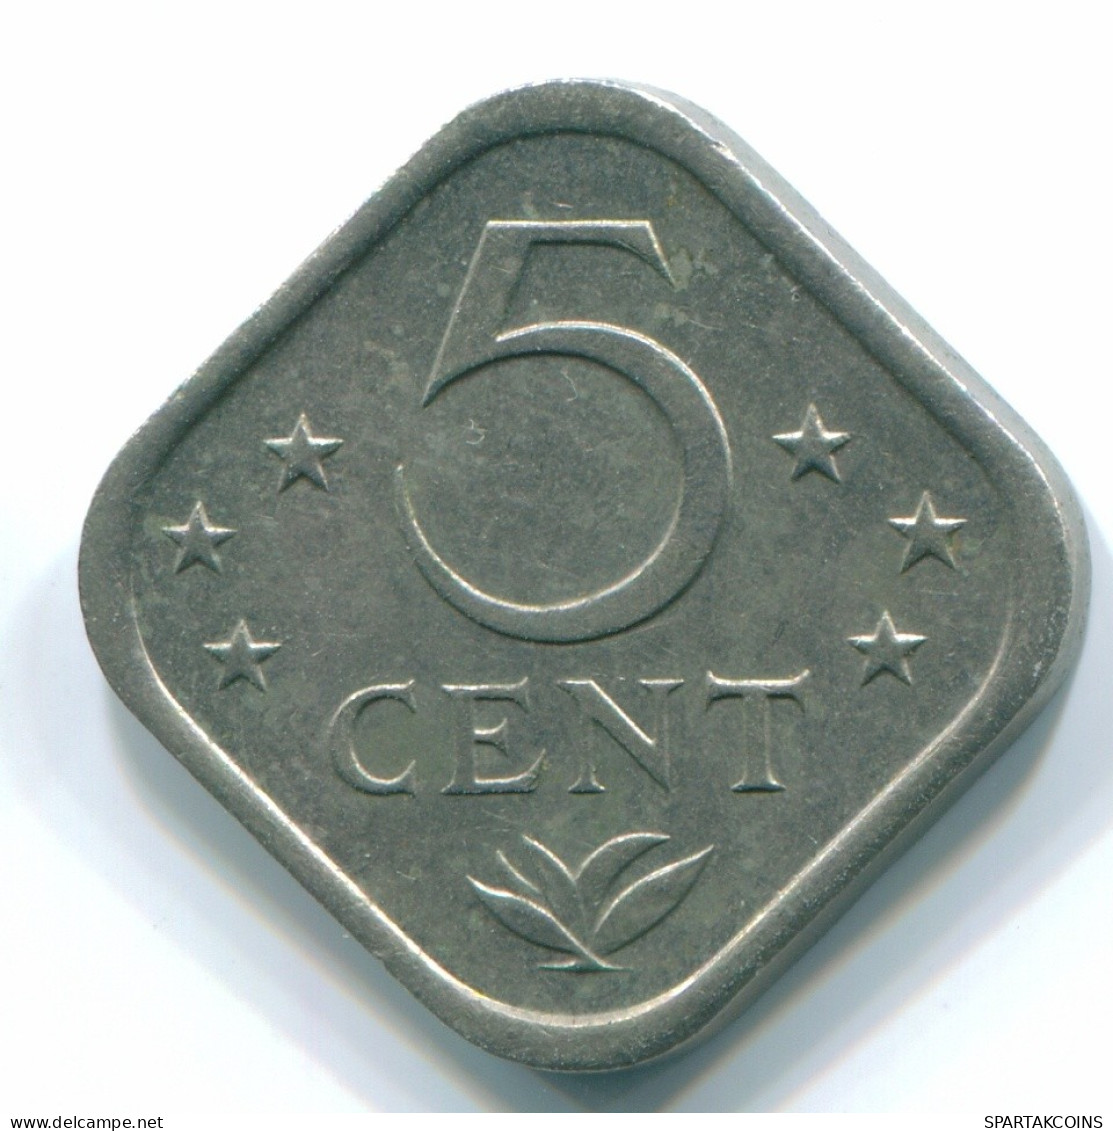 5 CENTS 1981 NETHERLANDS ANTILLES Nickel Colonial Coin #S12345.U.A - Nederlandse Antillen